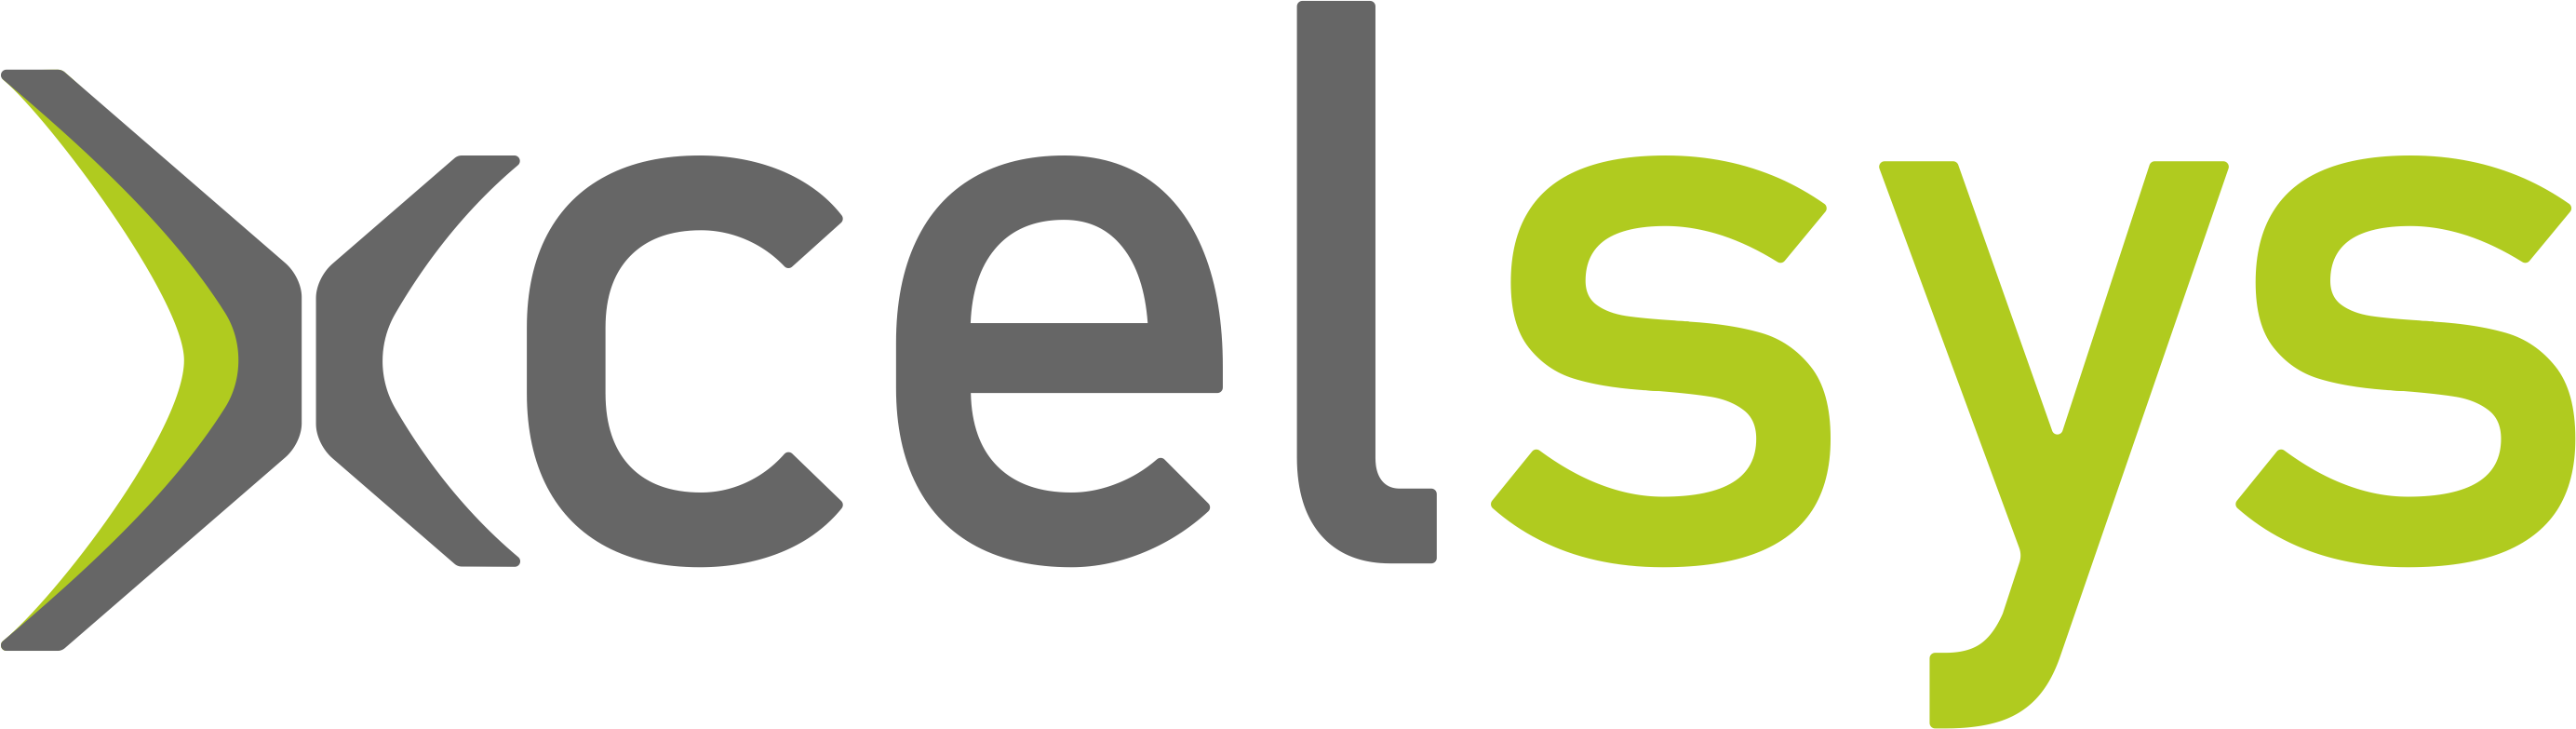 Xcelsys Logosu